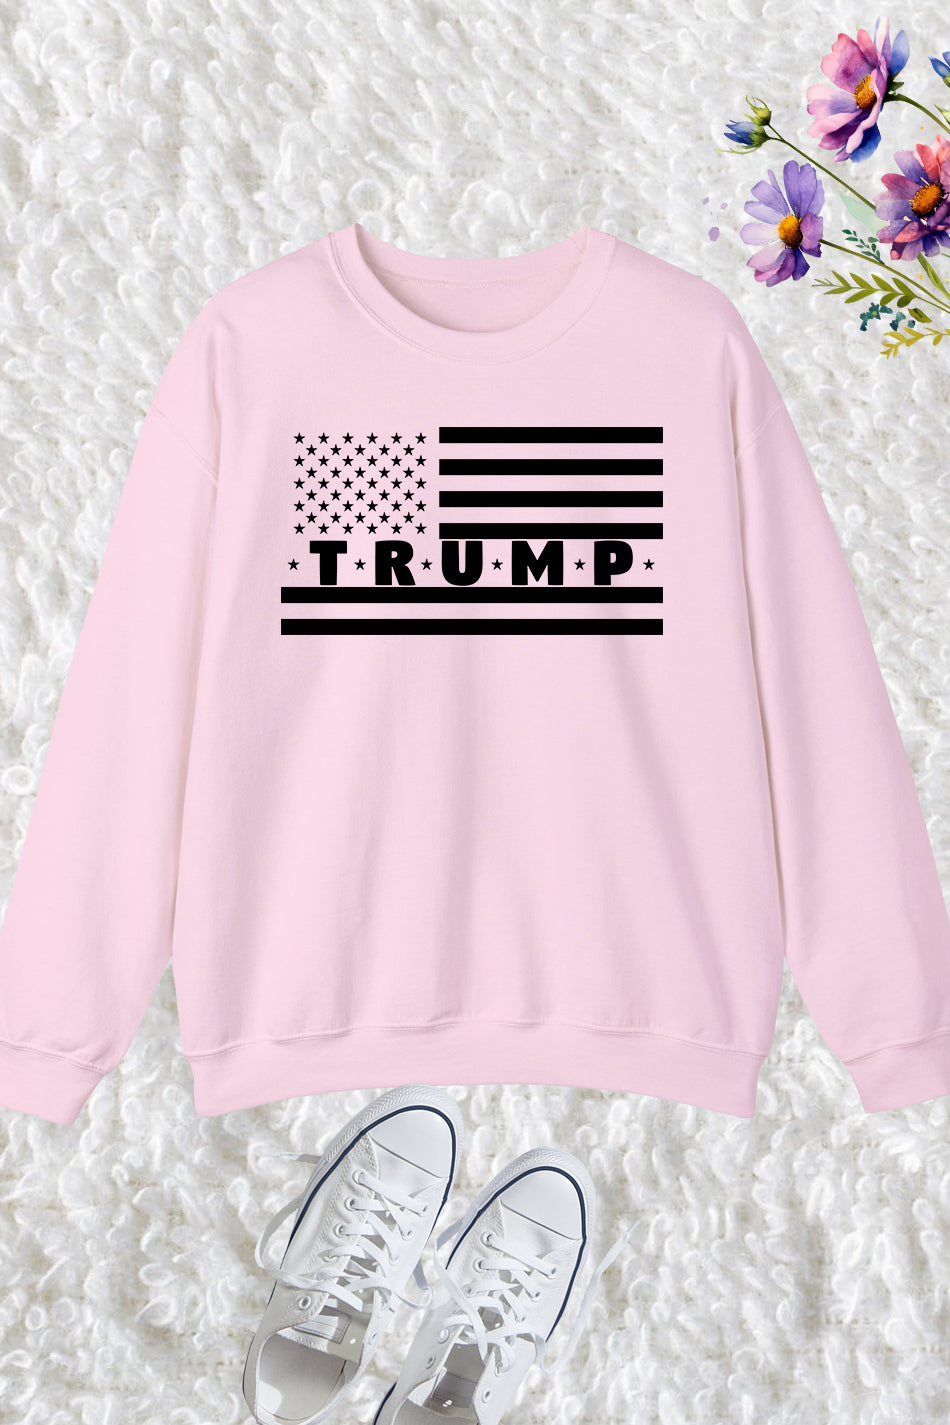 Trump Flag Republican MAGA Political Sweatshirts